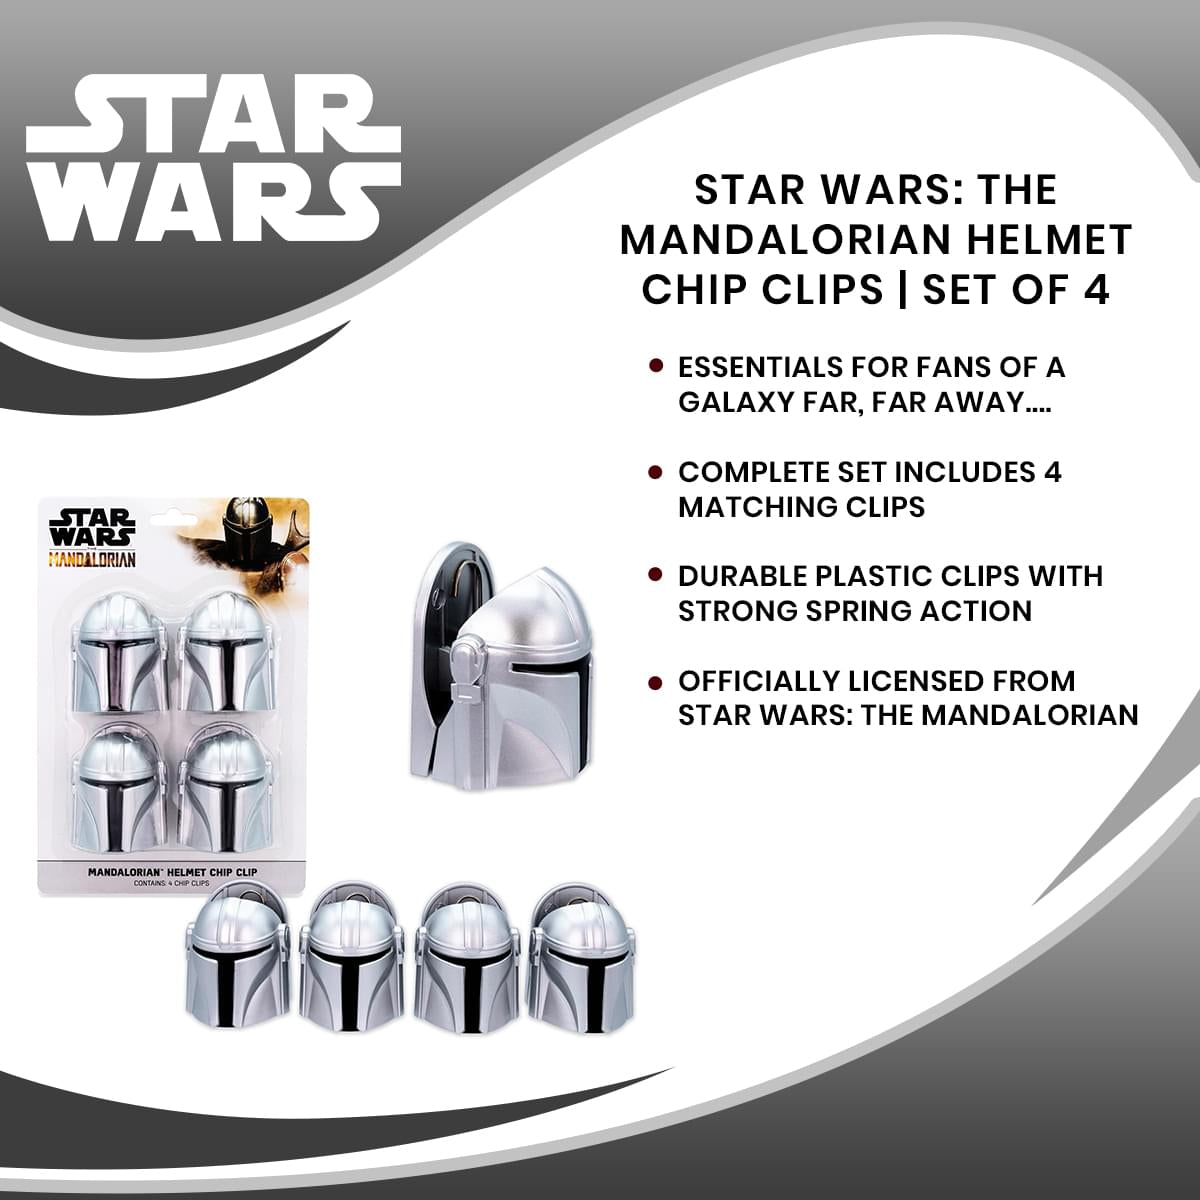 Star Wars: The Mandalorian Helmet Chip Clips | Set of 4